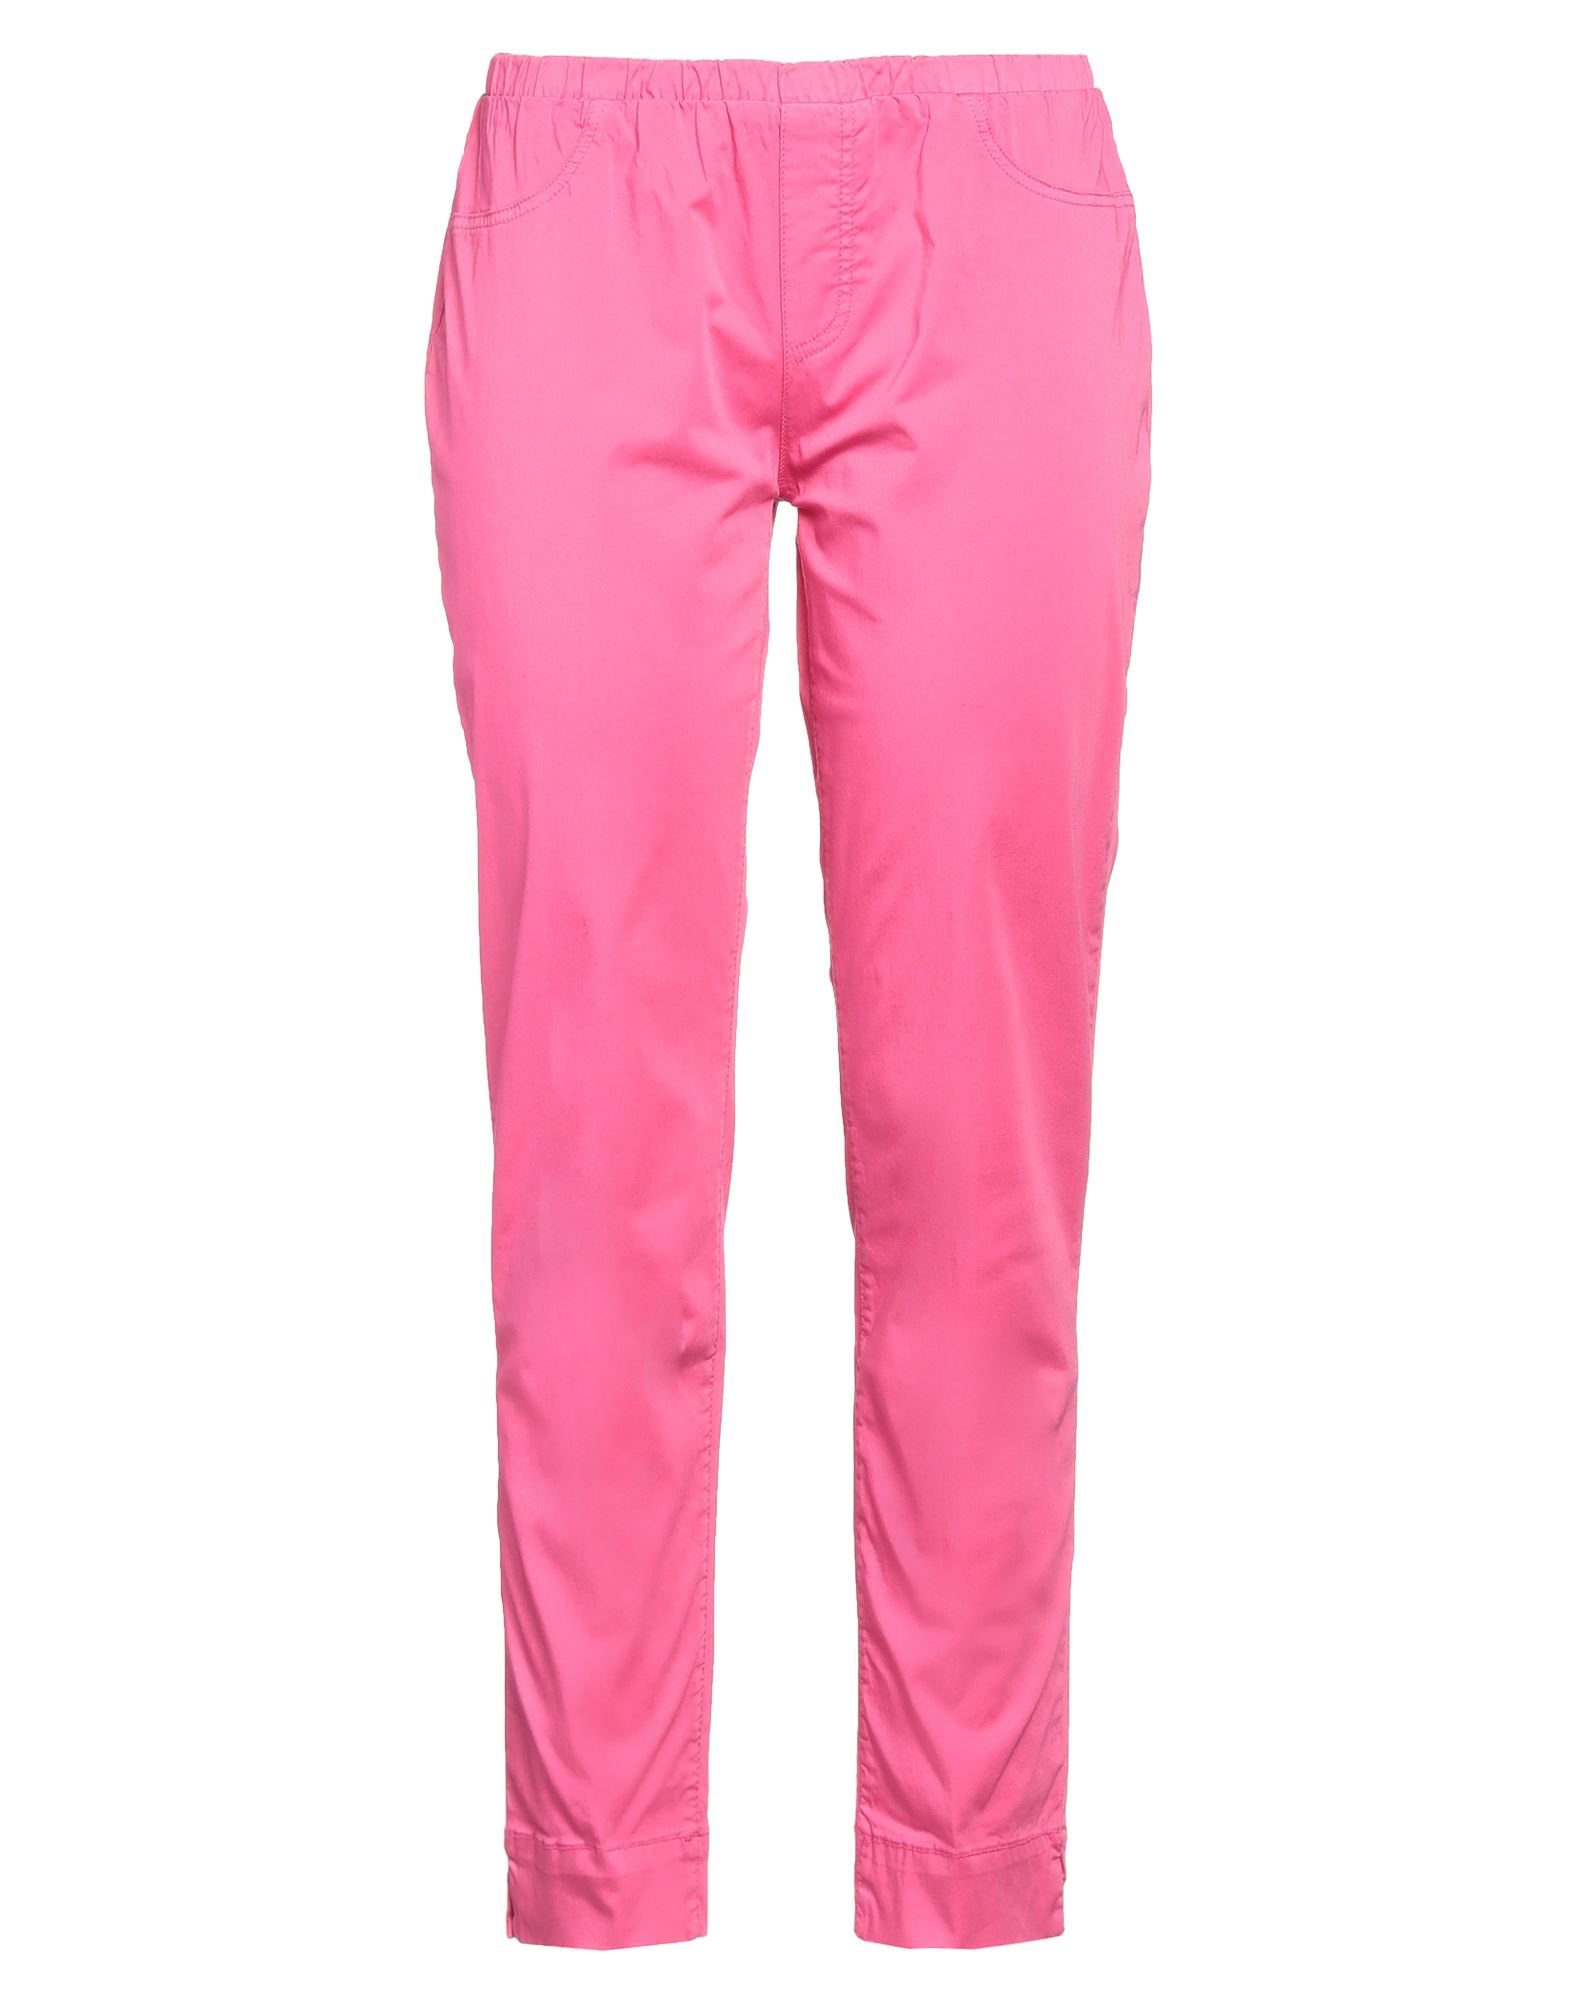 Lfdl Pants In Pink